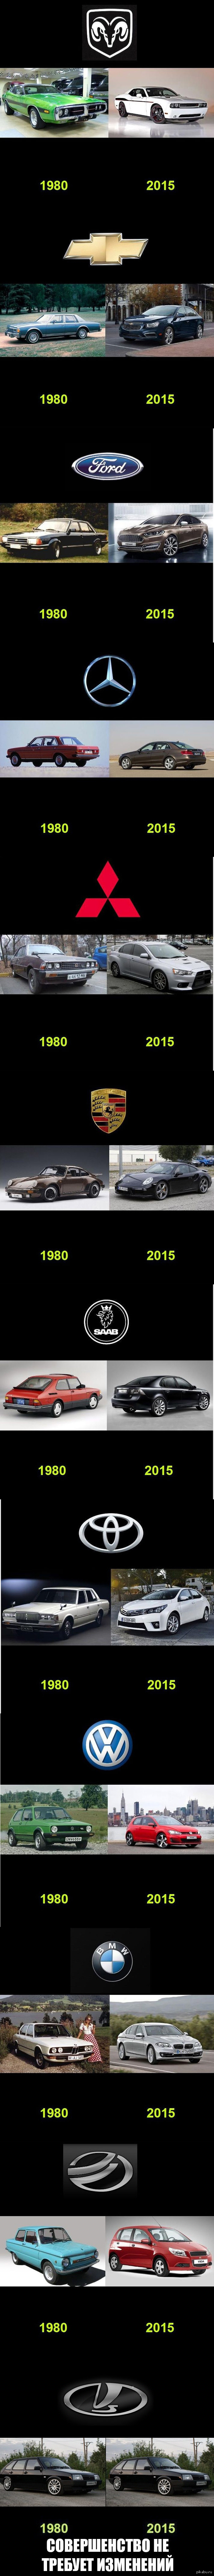 How cars have changed - NSFW, My, Longpost, Joke, Humor, Auto